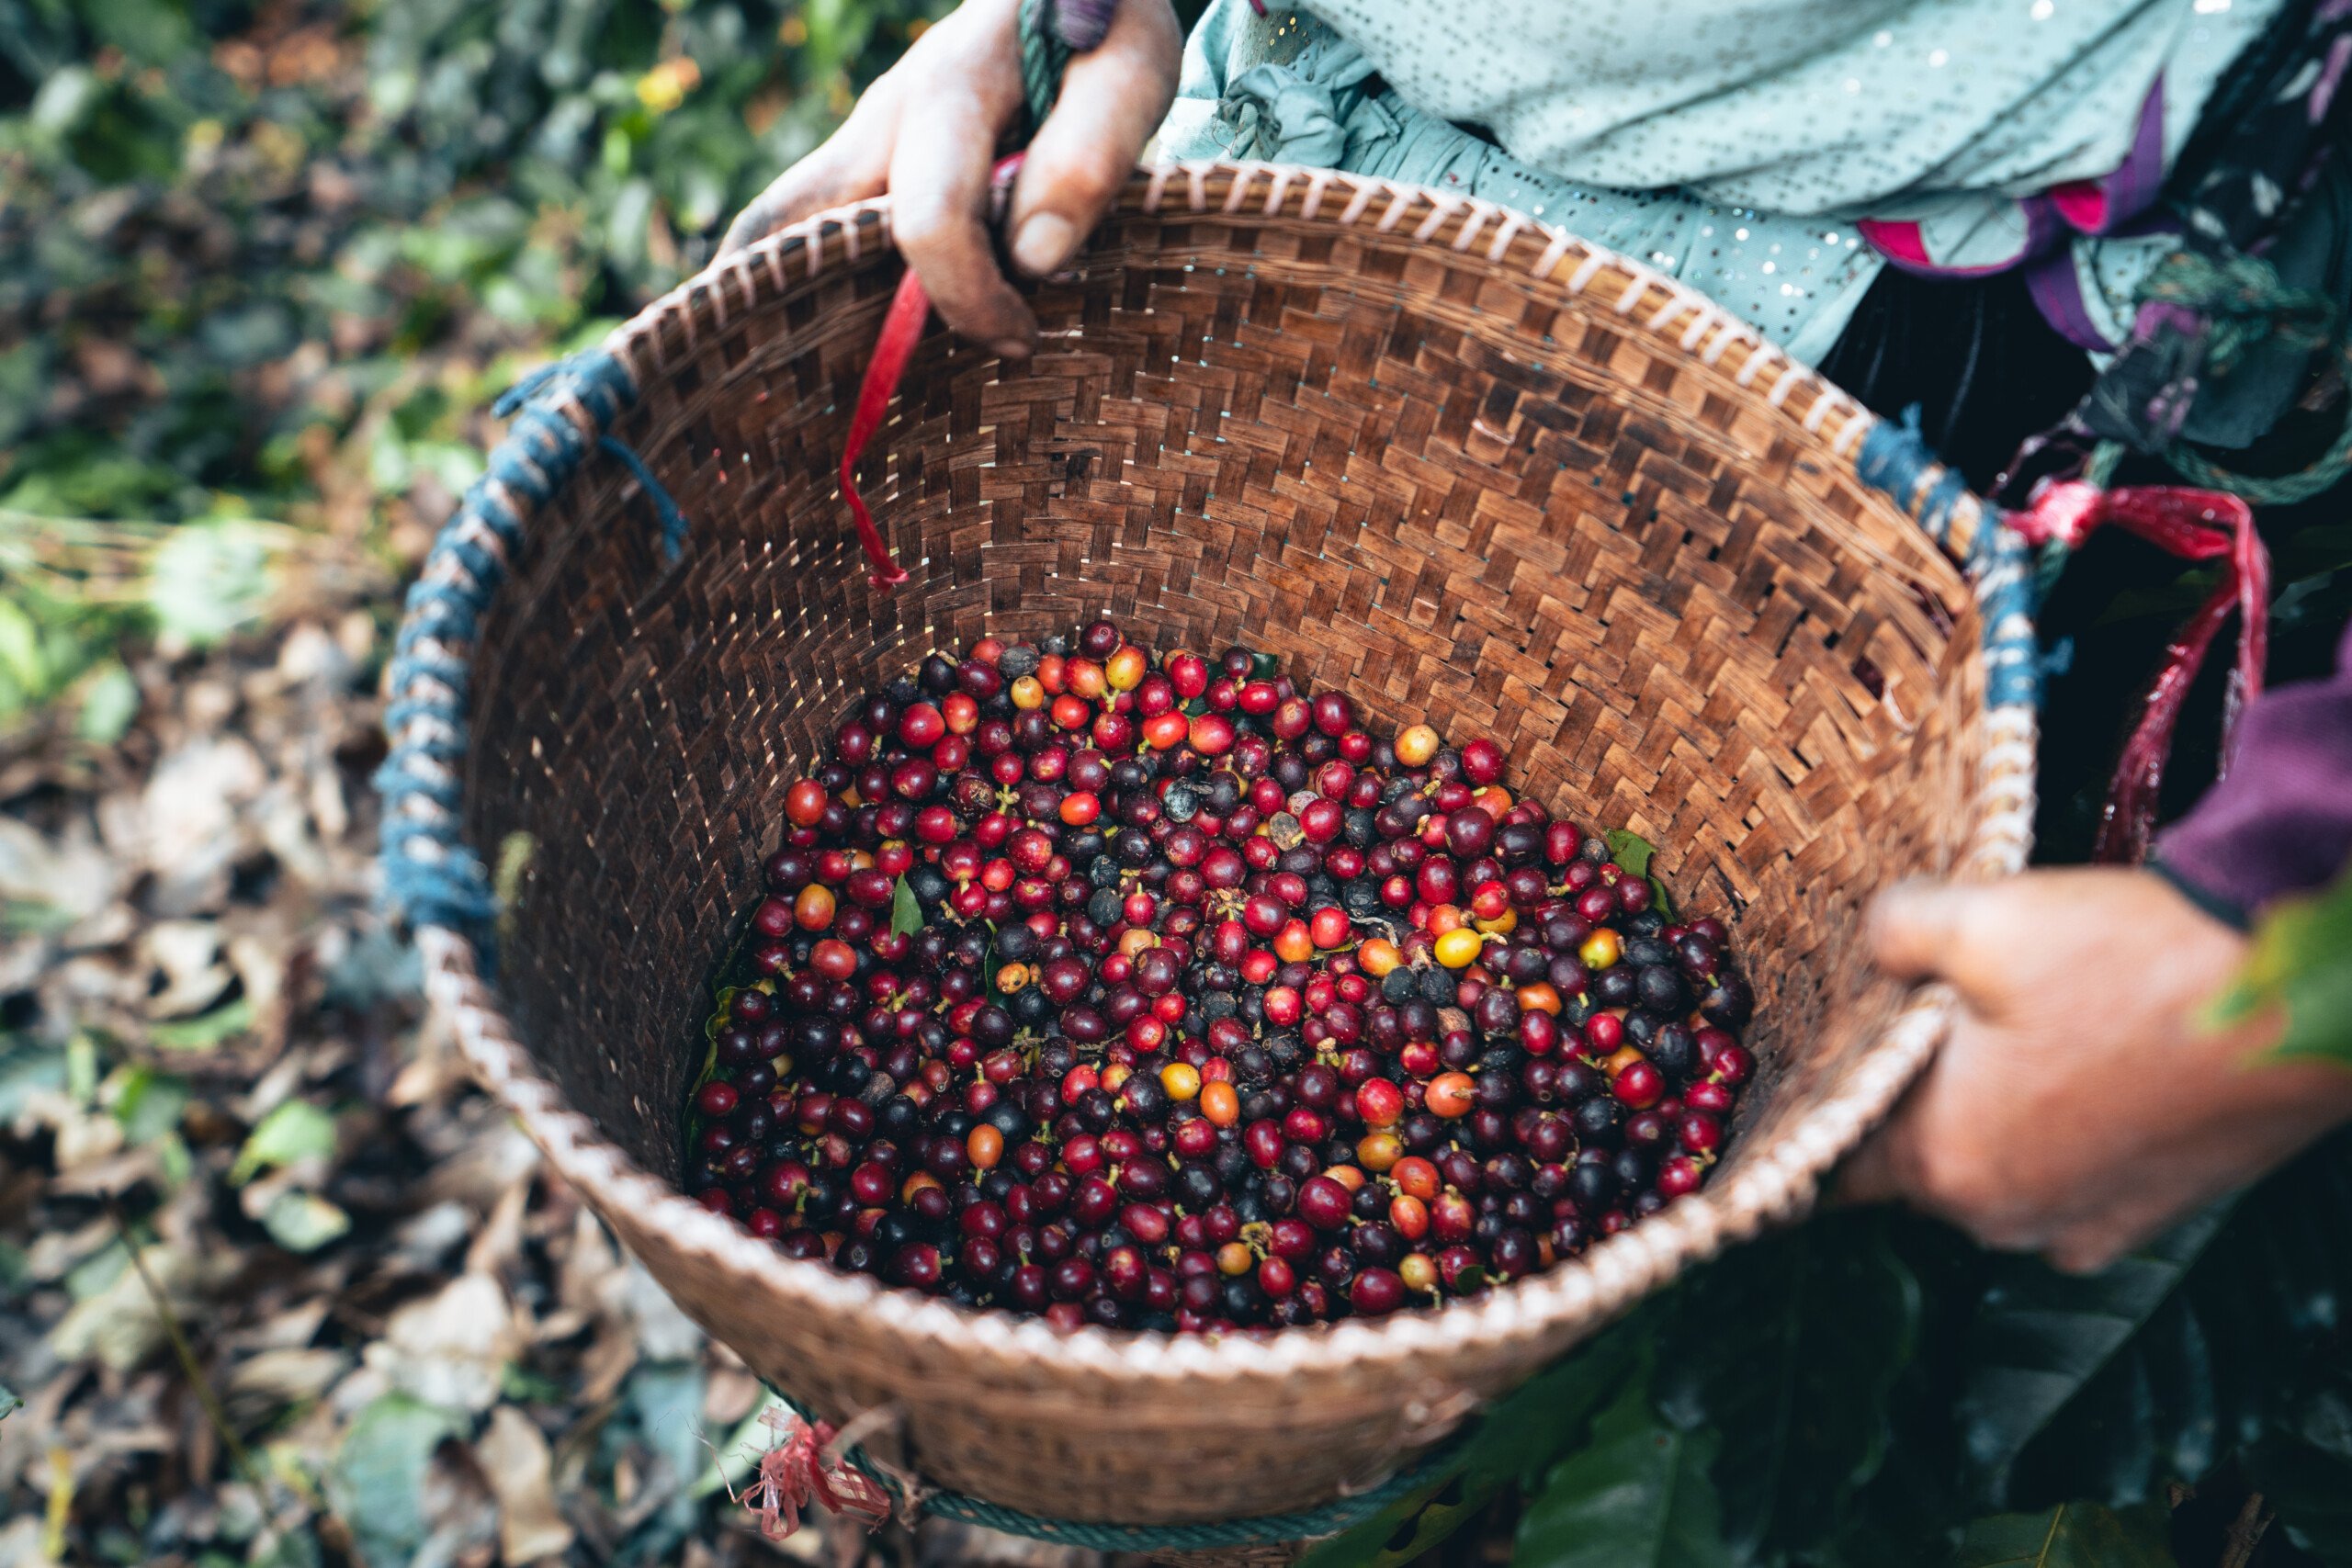 coffee and arabica coffee plantation harvest day 2022 01 28 18 30 33 utc scaled